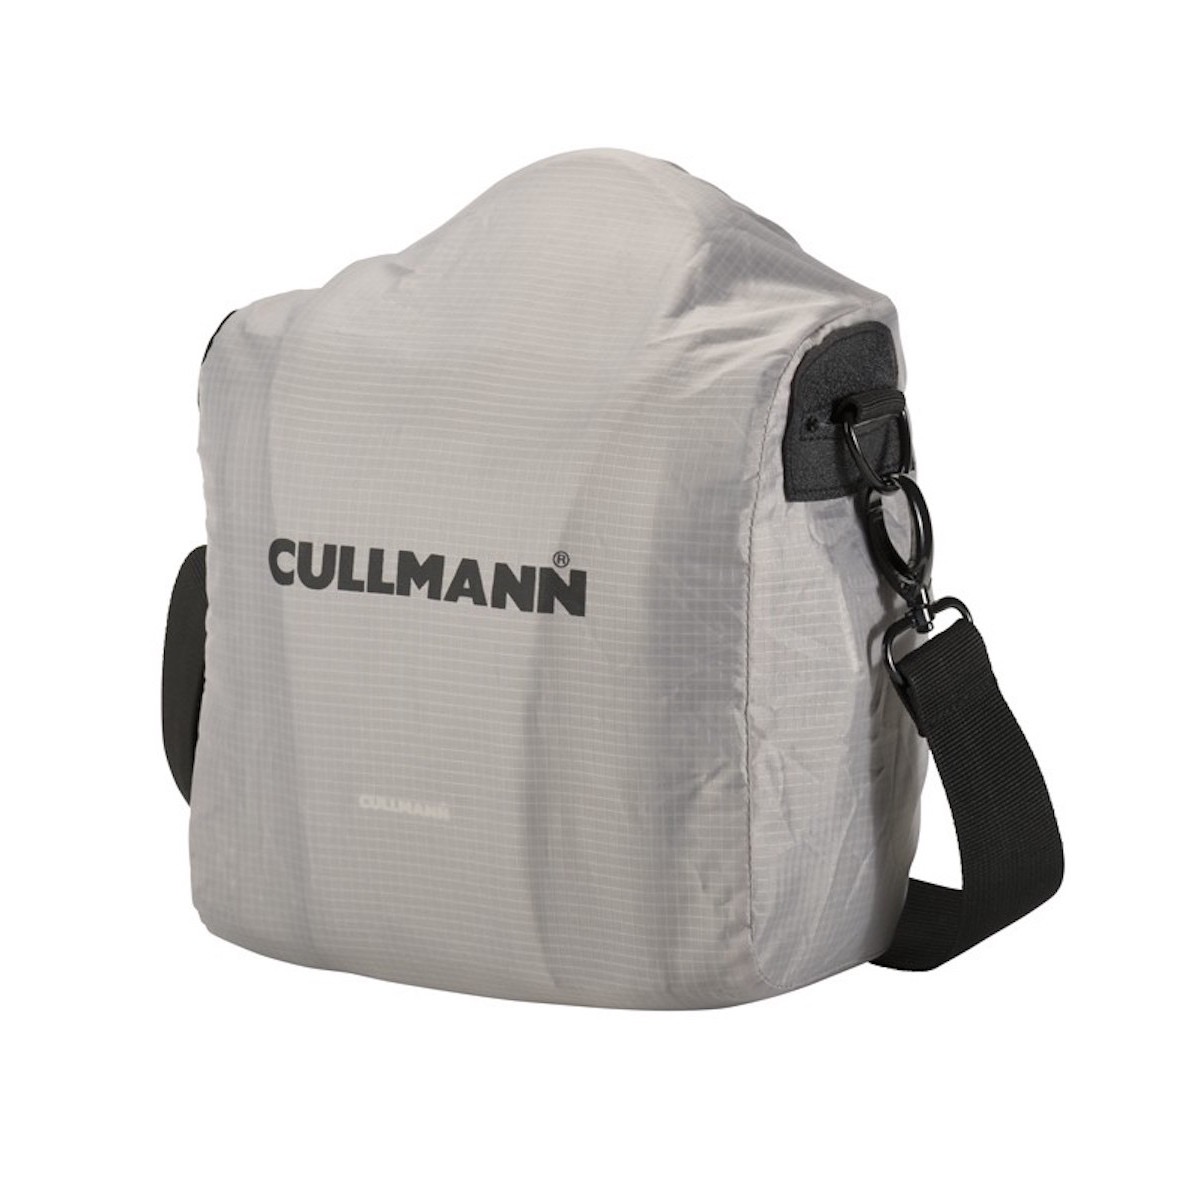 Cullmann Sydney pro Maxima 80 Kamera Tasche